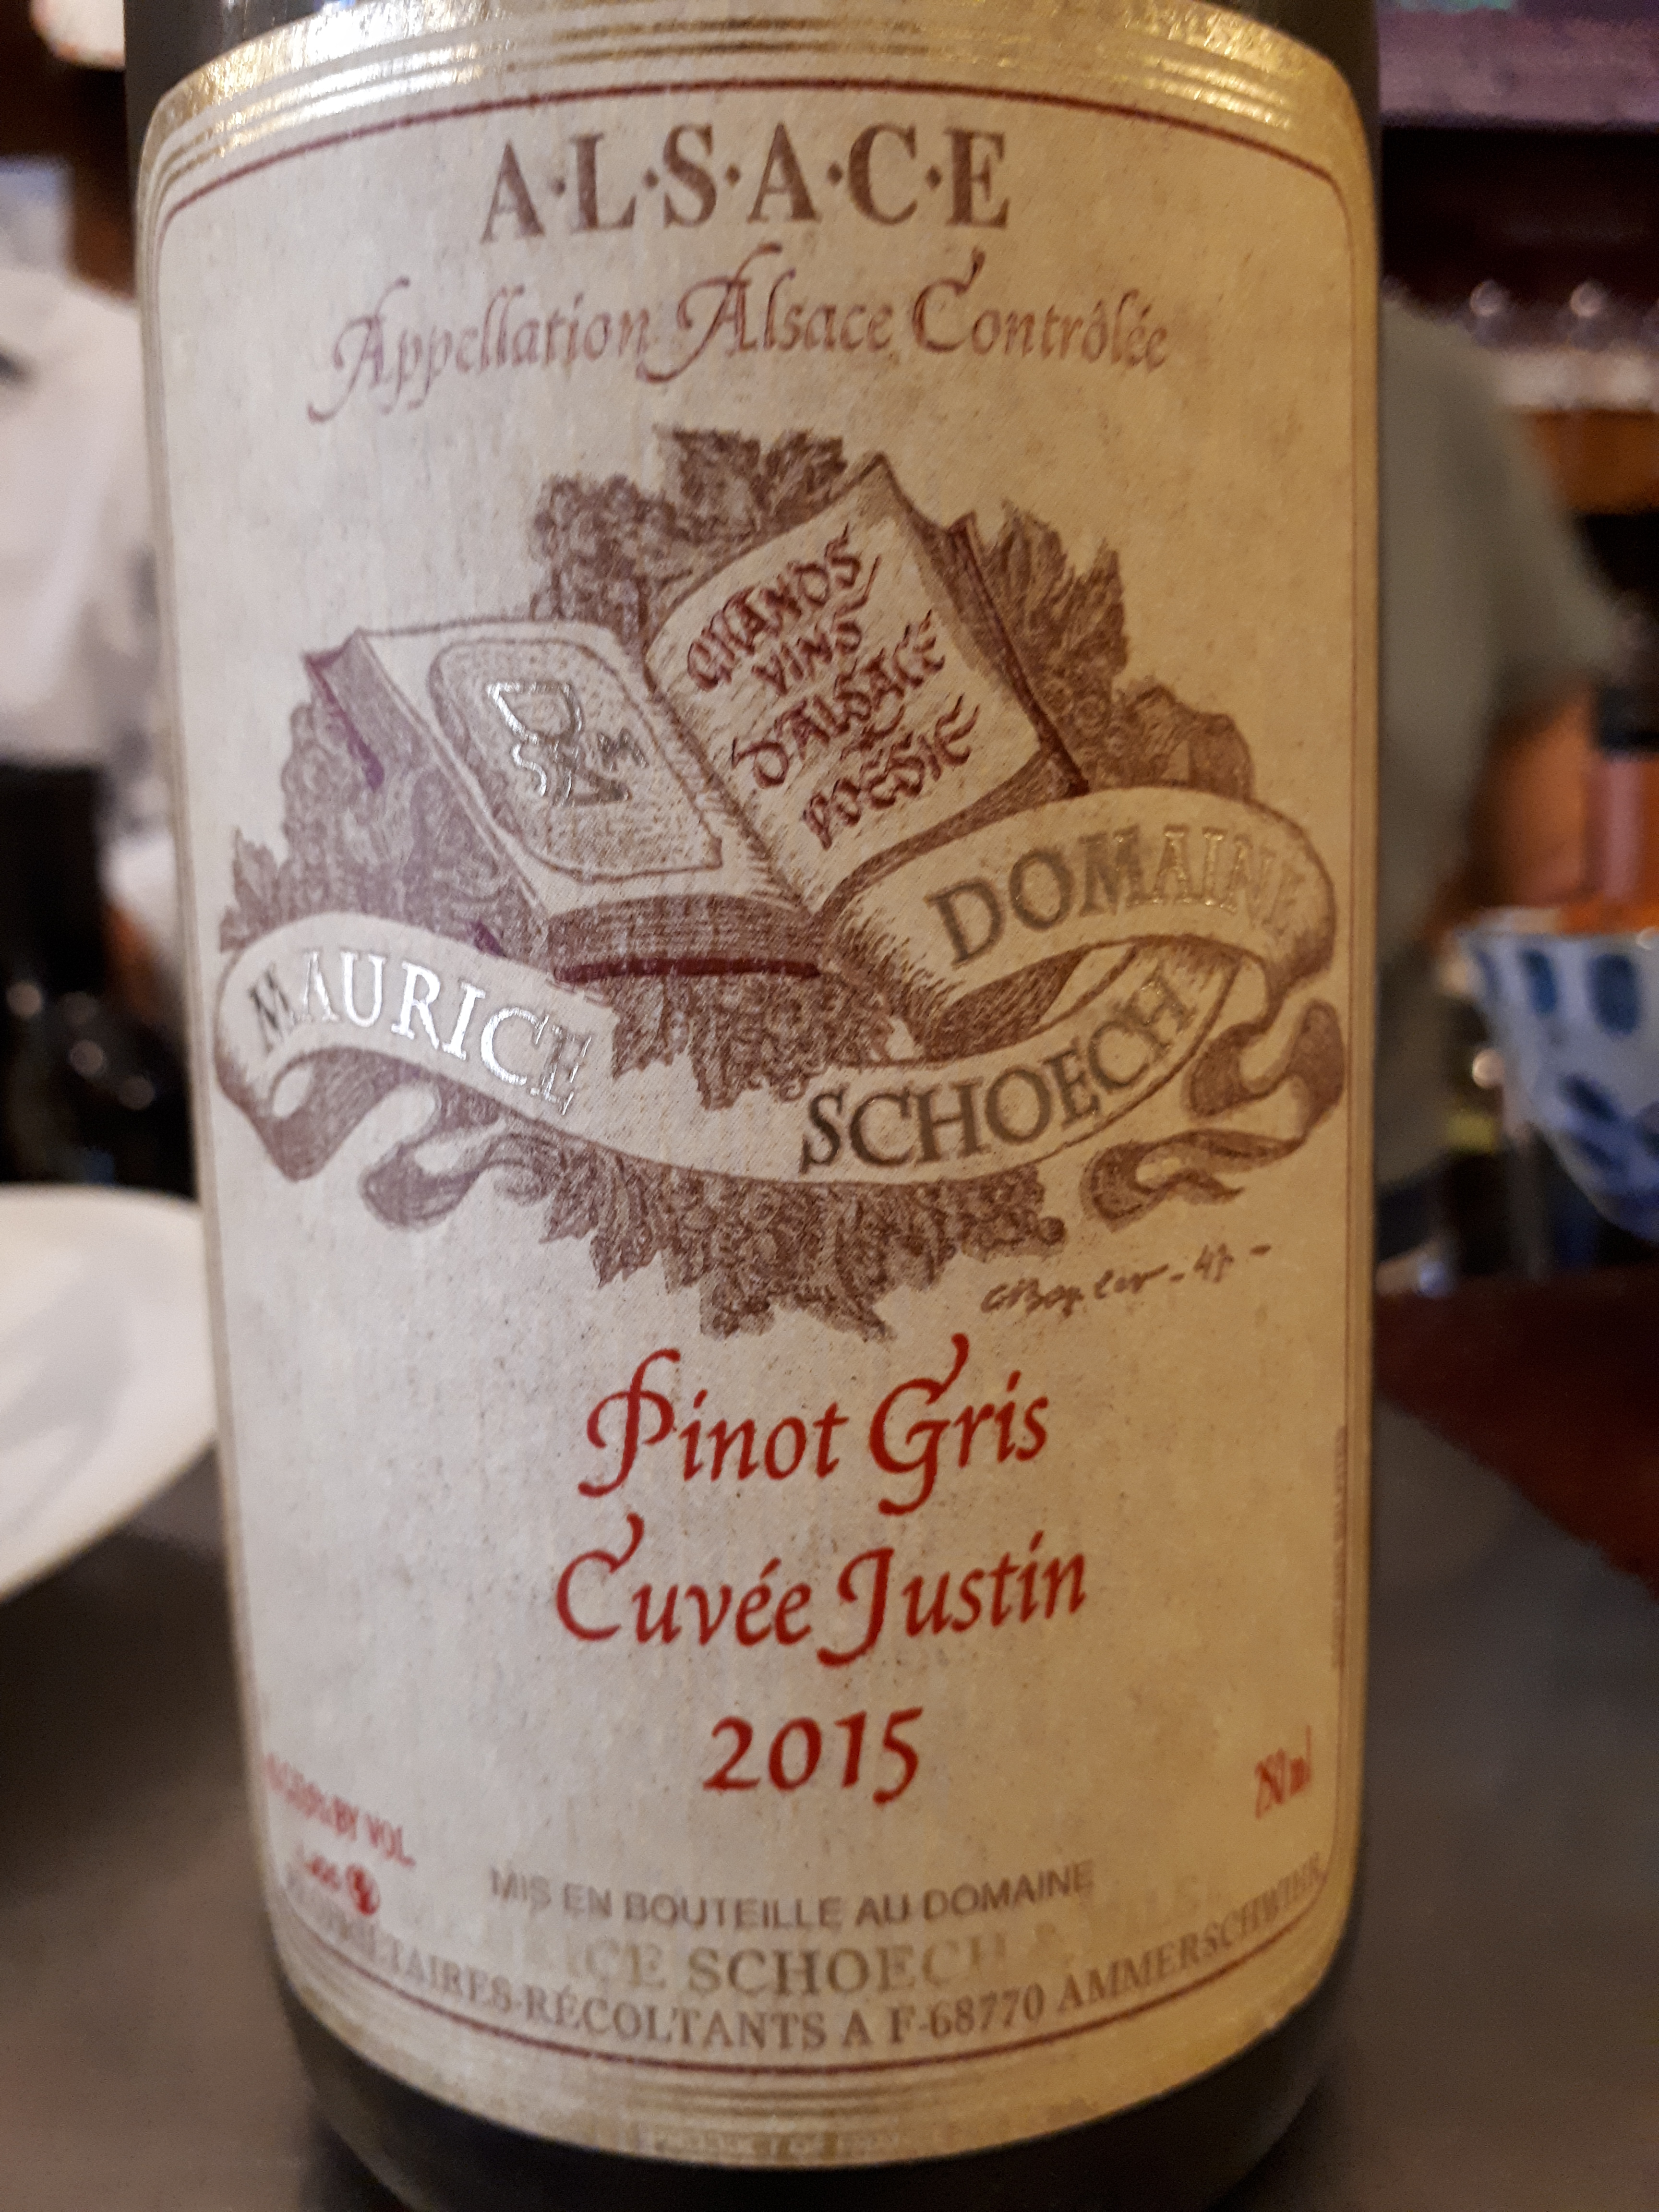 Alsace Pinot Gris Cuvée Justin 2015 - Maurice Schoech